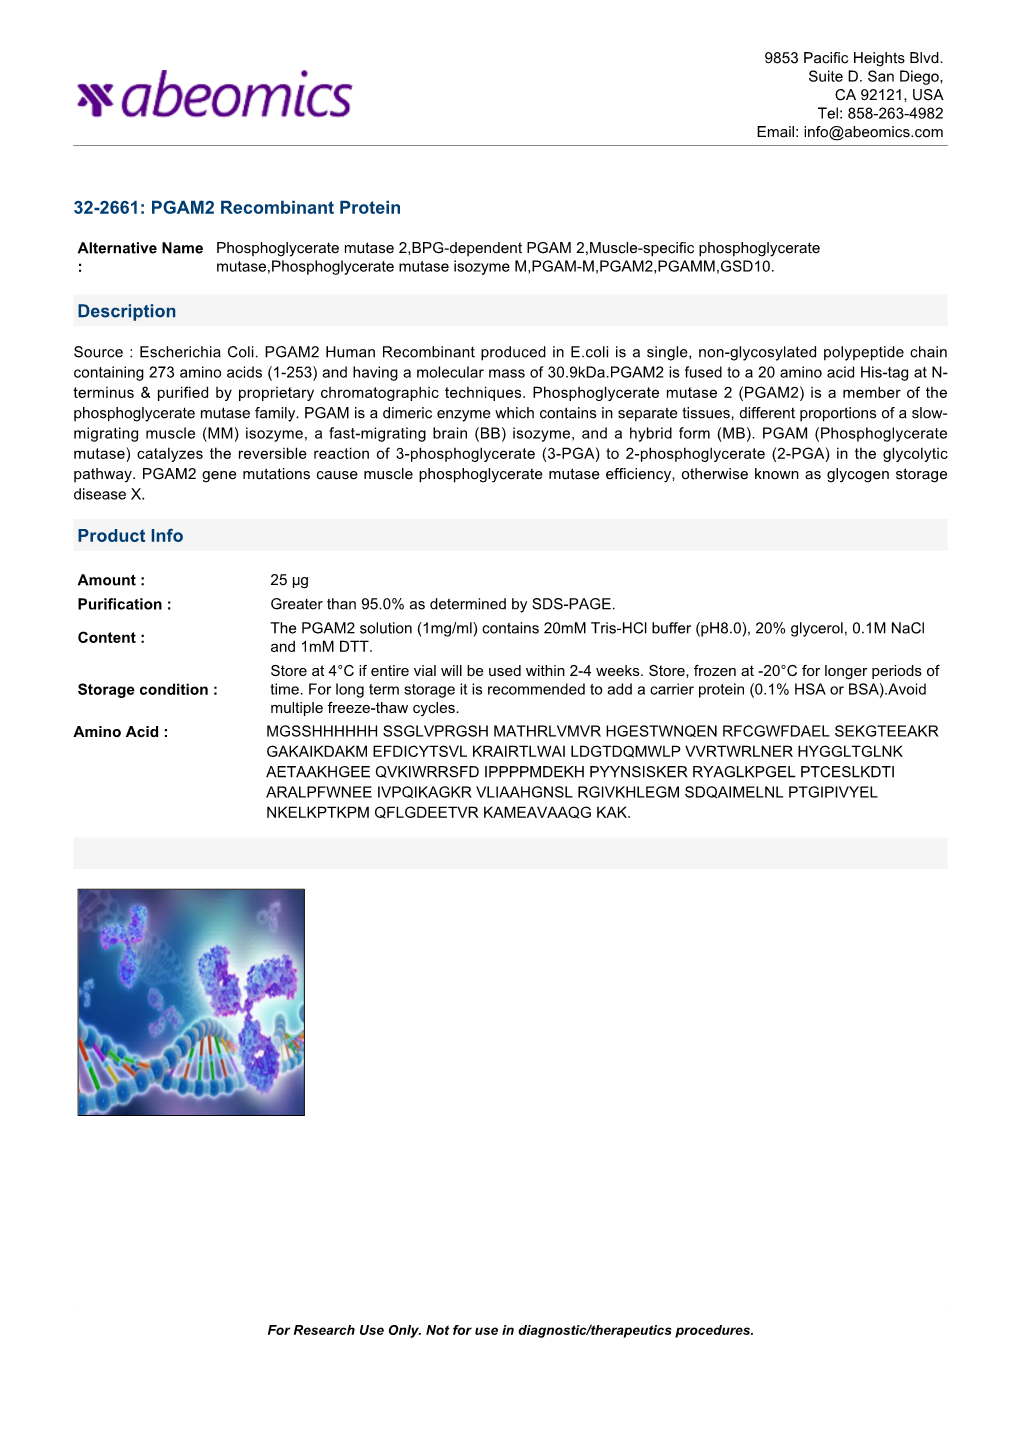 32-2661: PGAM2 Recombinant Protein Description Product Info